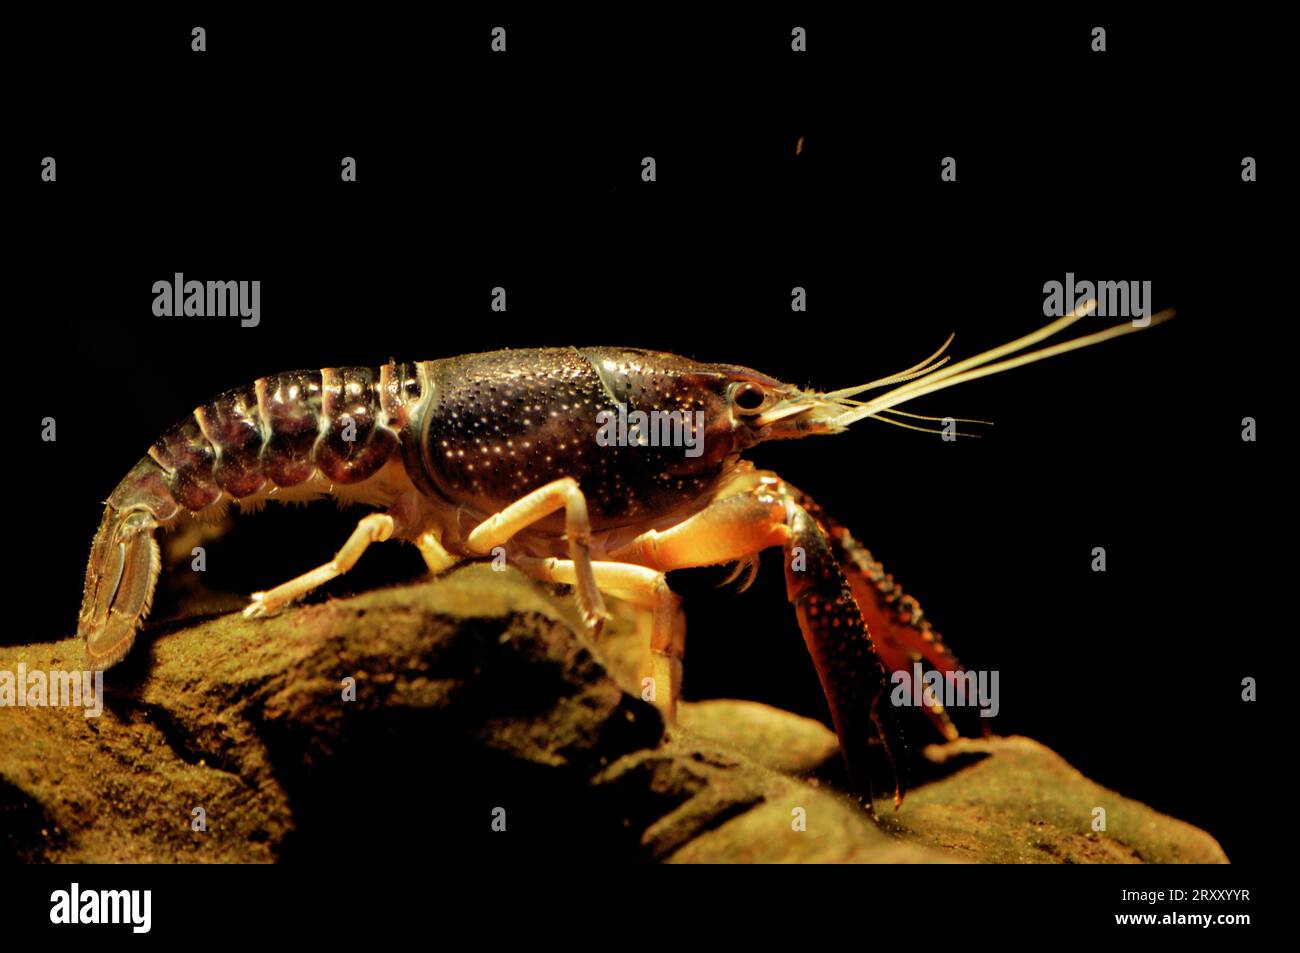 Louisiana Red Crayfish (Procambarus clarkii), Red Swamp Crayfish, side Stock Photo